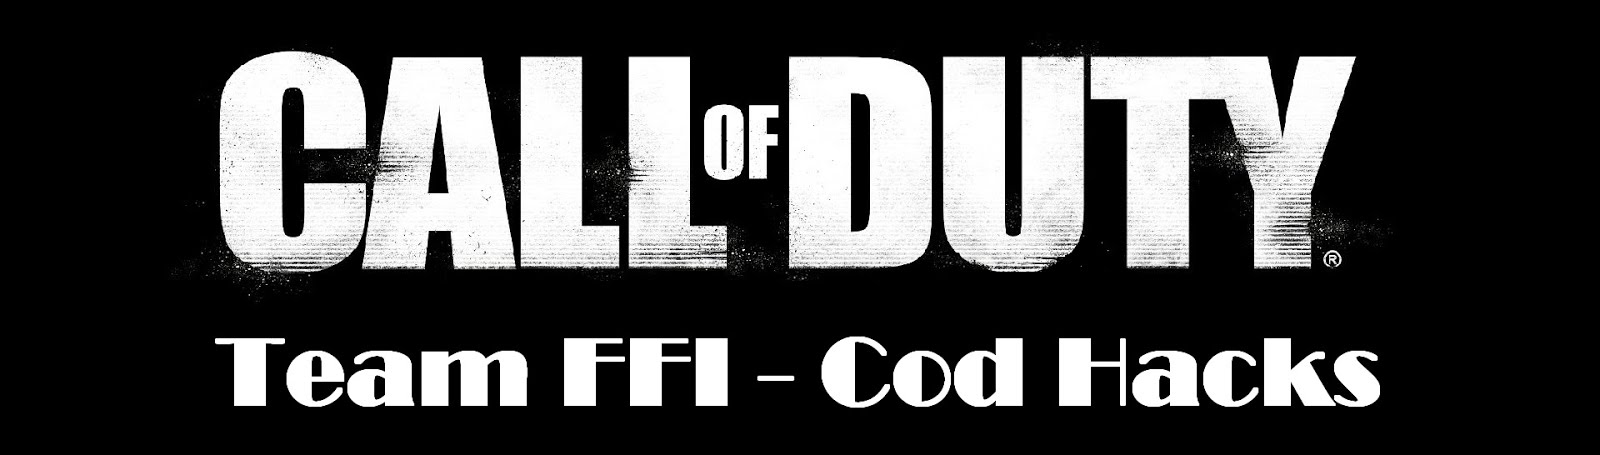 CoD - Team FFI - CoD Hacks